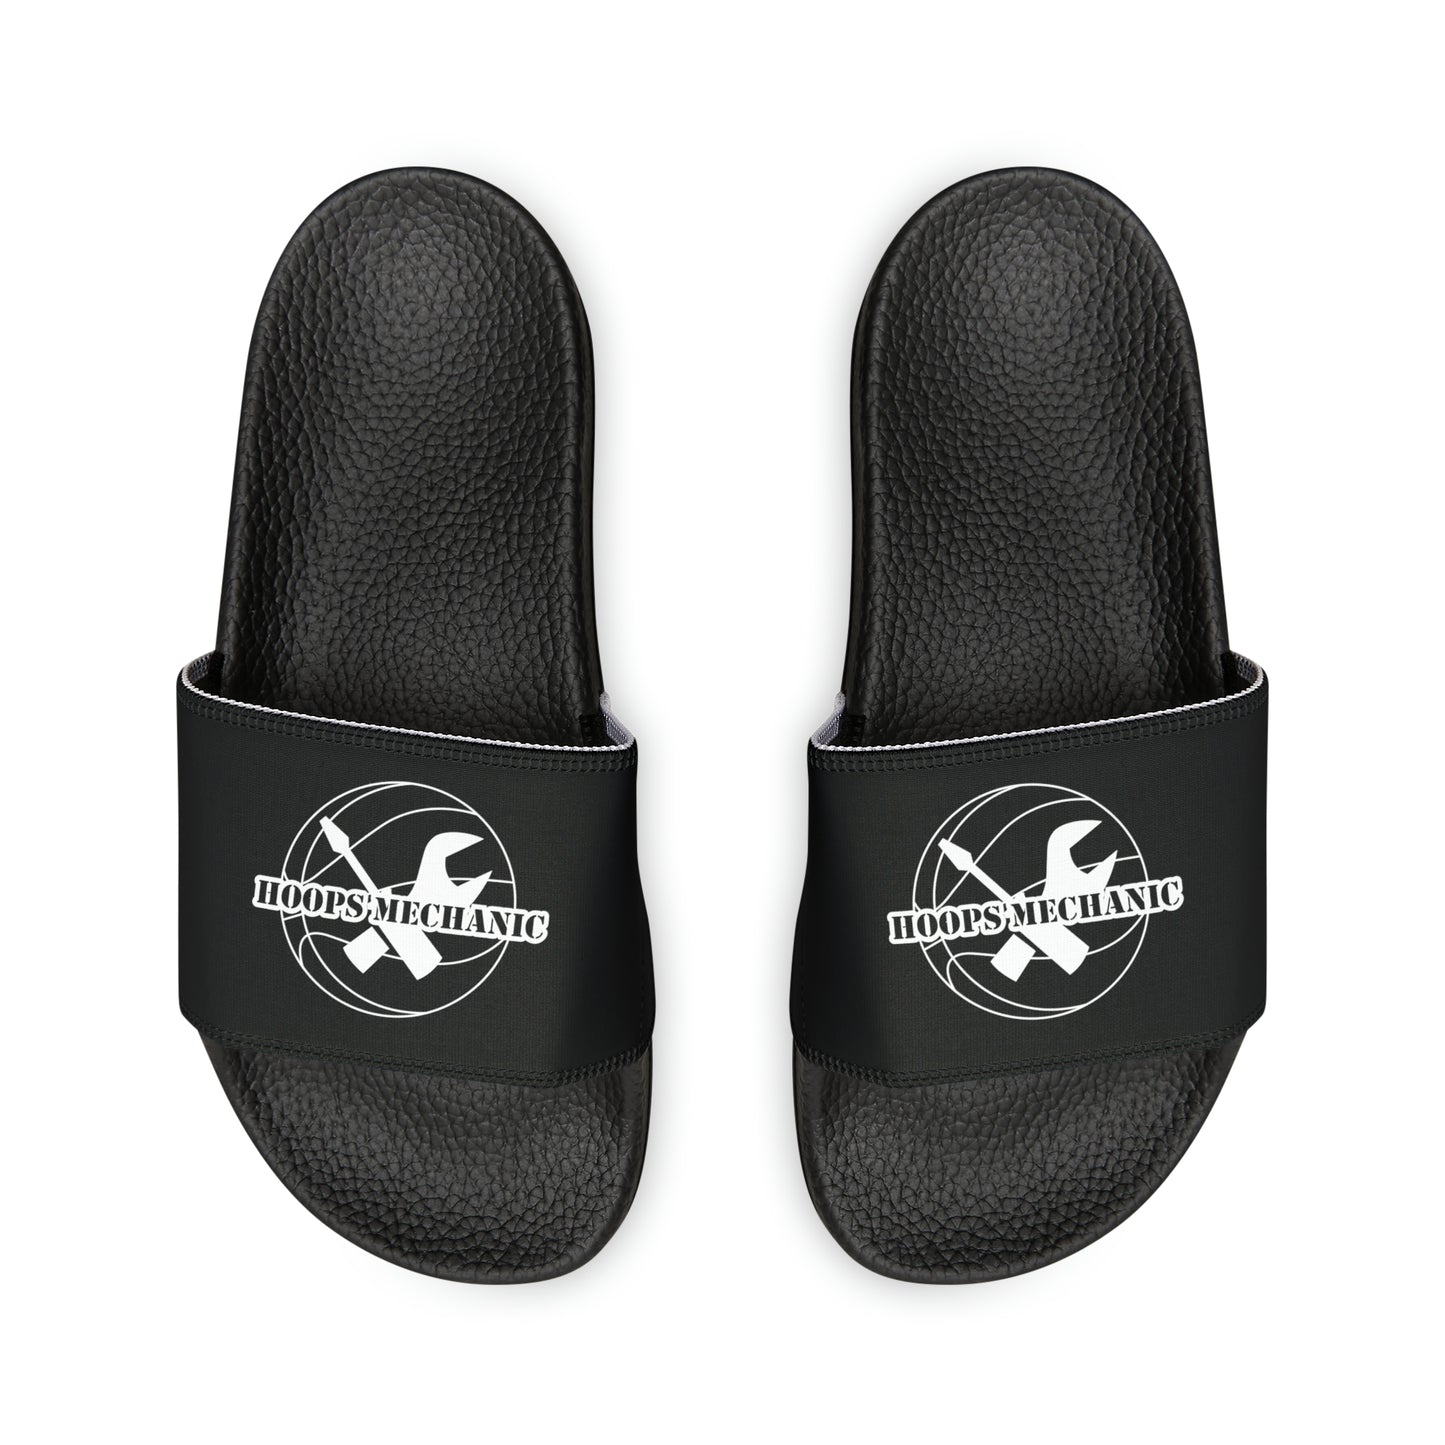 Hoops Mechanic Black Men's PU Slide Sandals